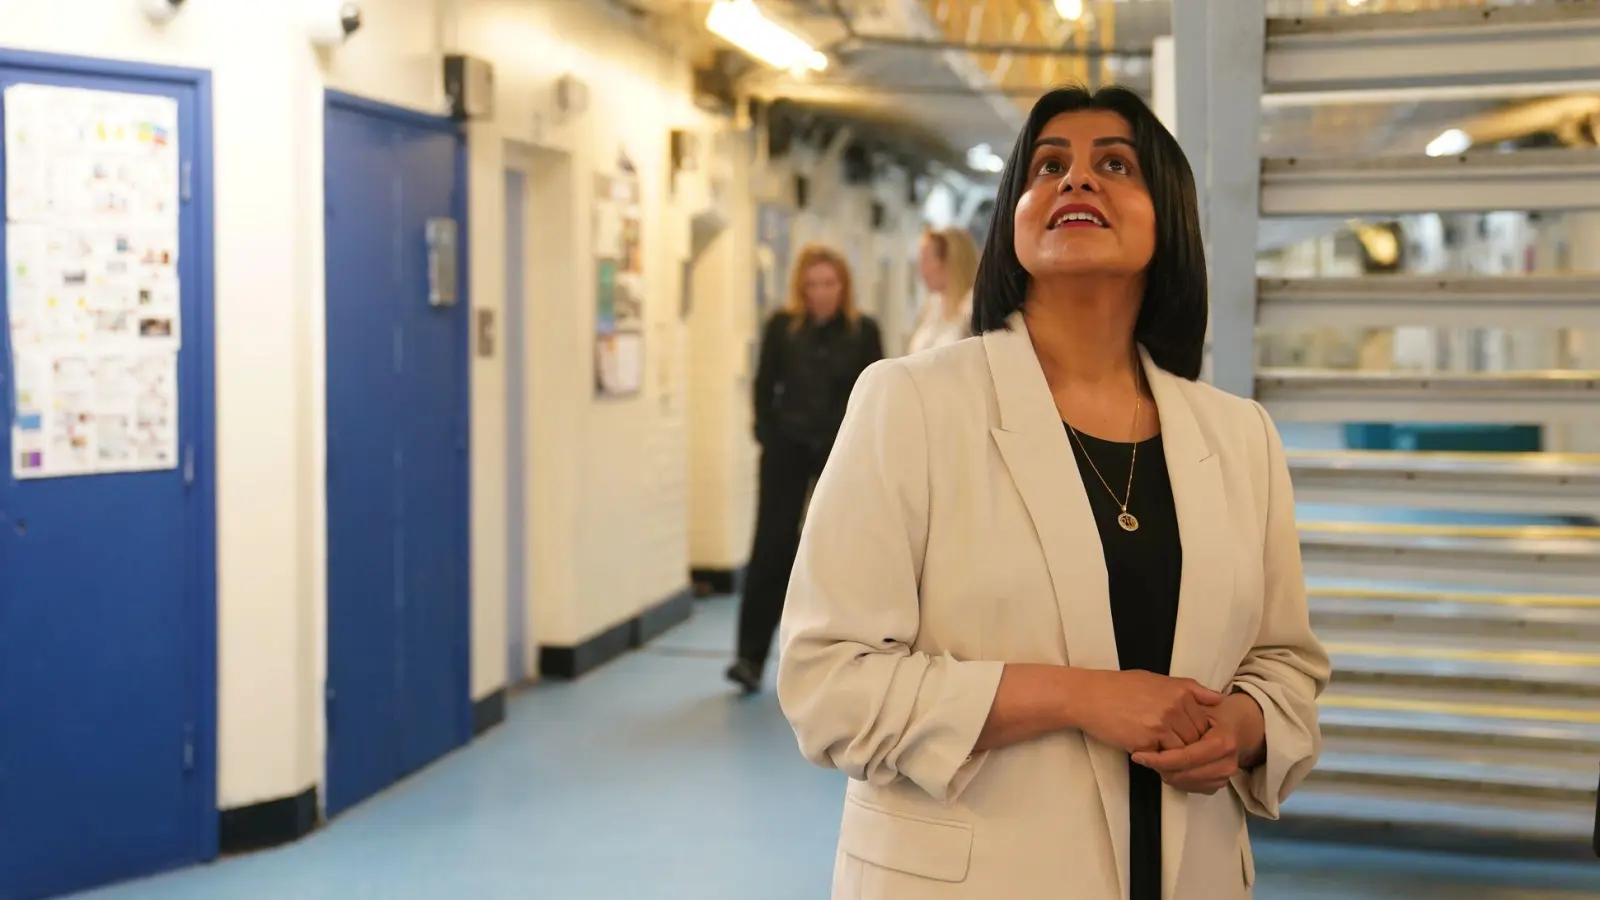 Besuch im Gefängnis: Justizministerin Shabana Mahmood. (Foto: Joe Giddens/PA Wire/dpa)